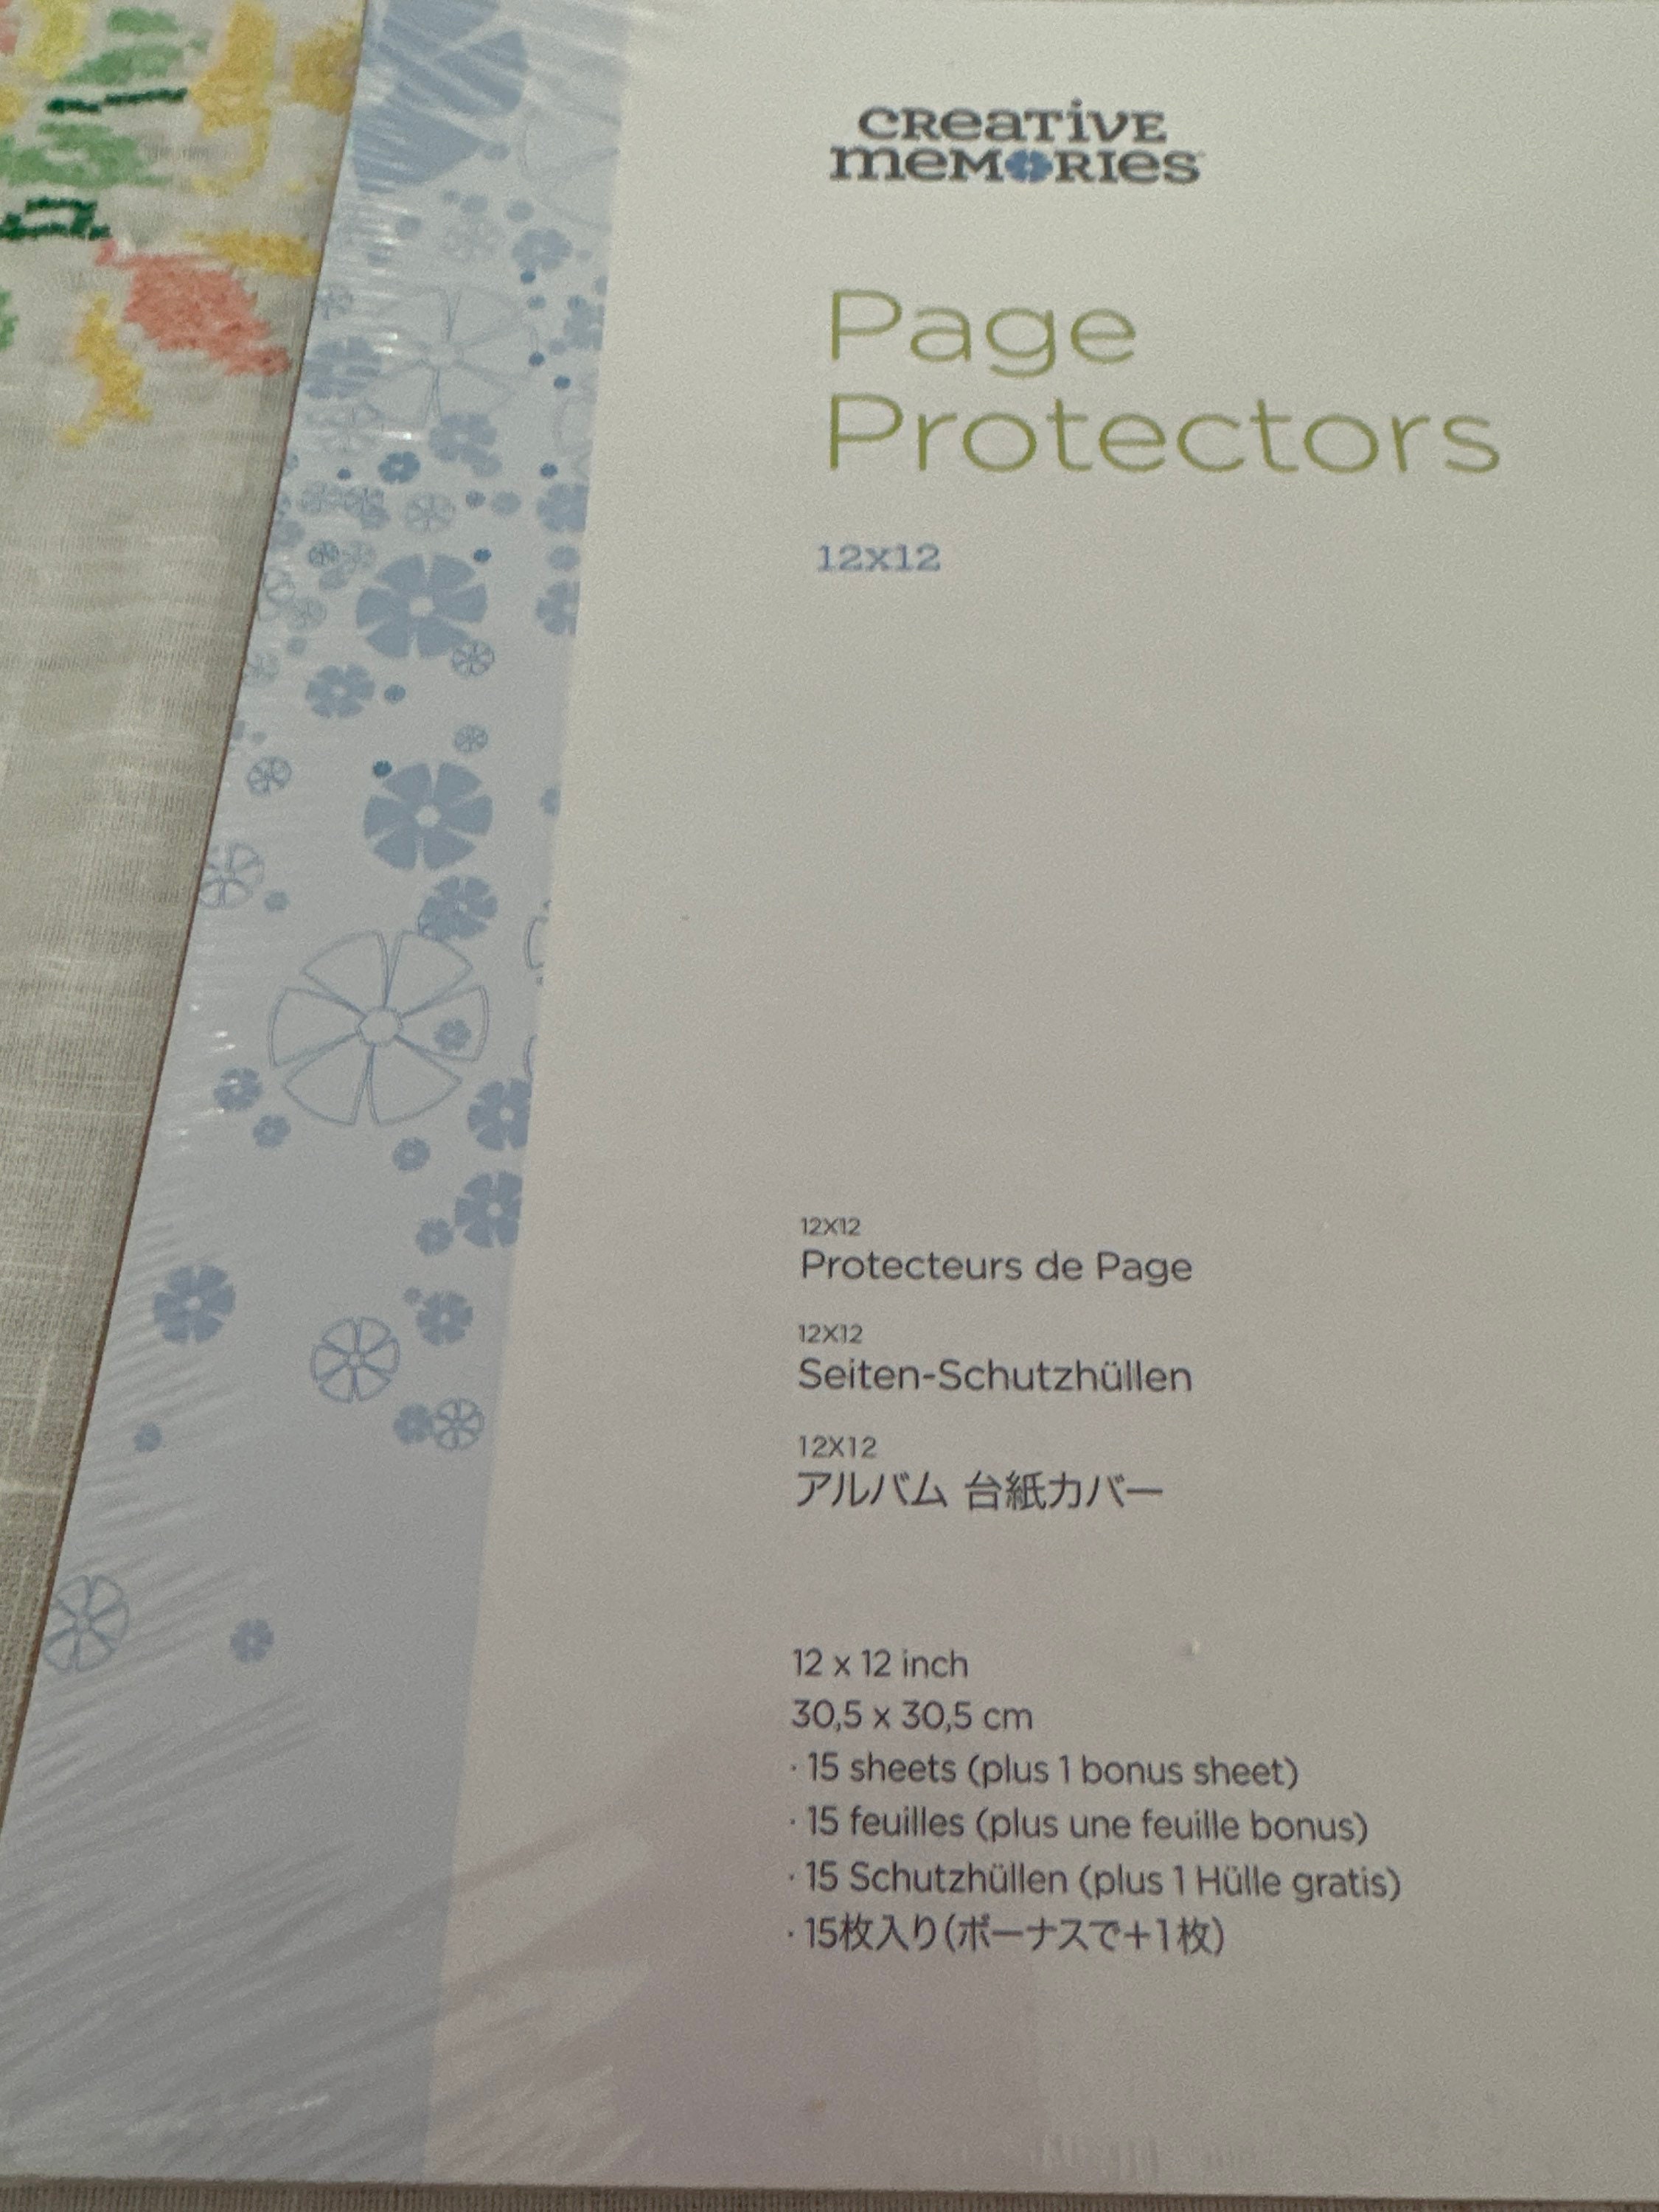 12x12 Pages & Protectors - Creative Memories